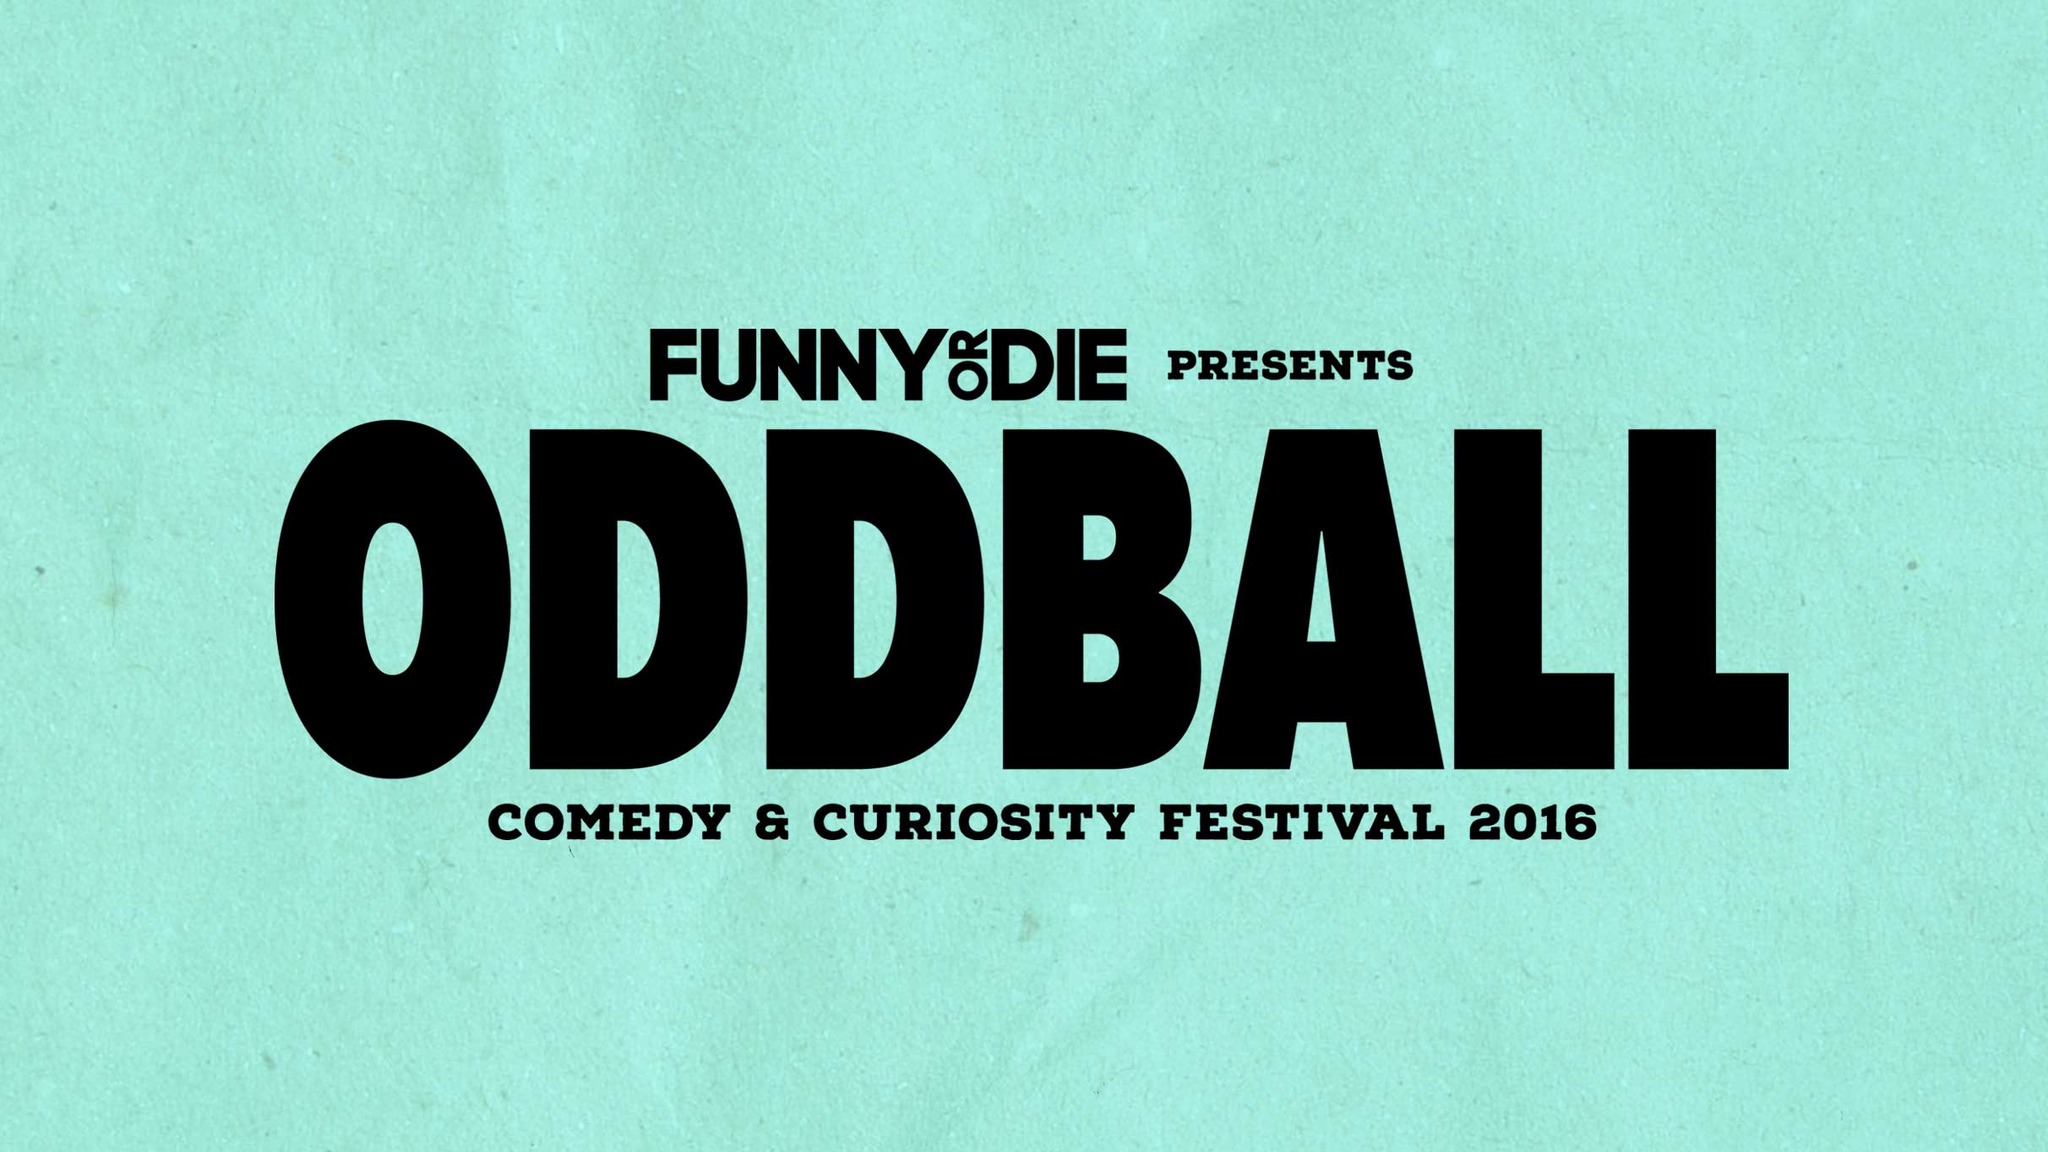 Oddball Comedy & Curiosity Festival Tickets Event Dates & Schedule